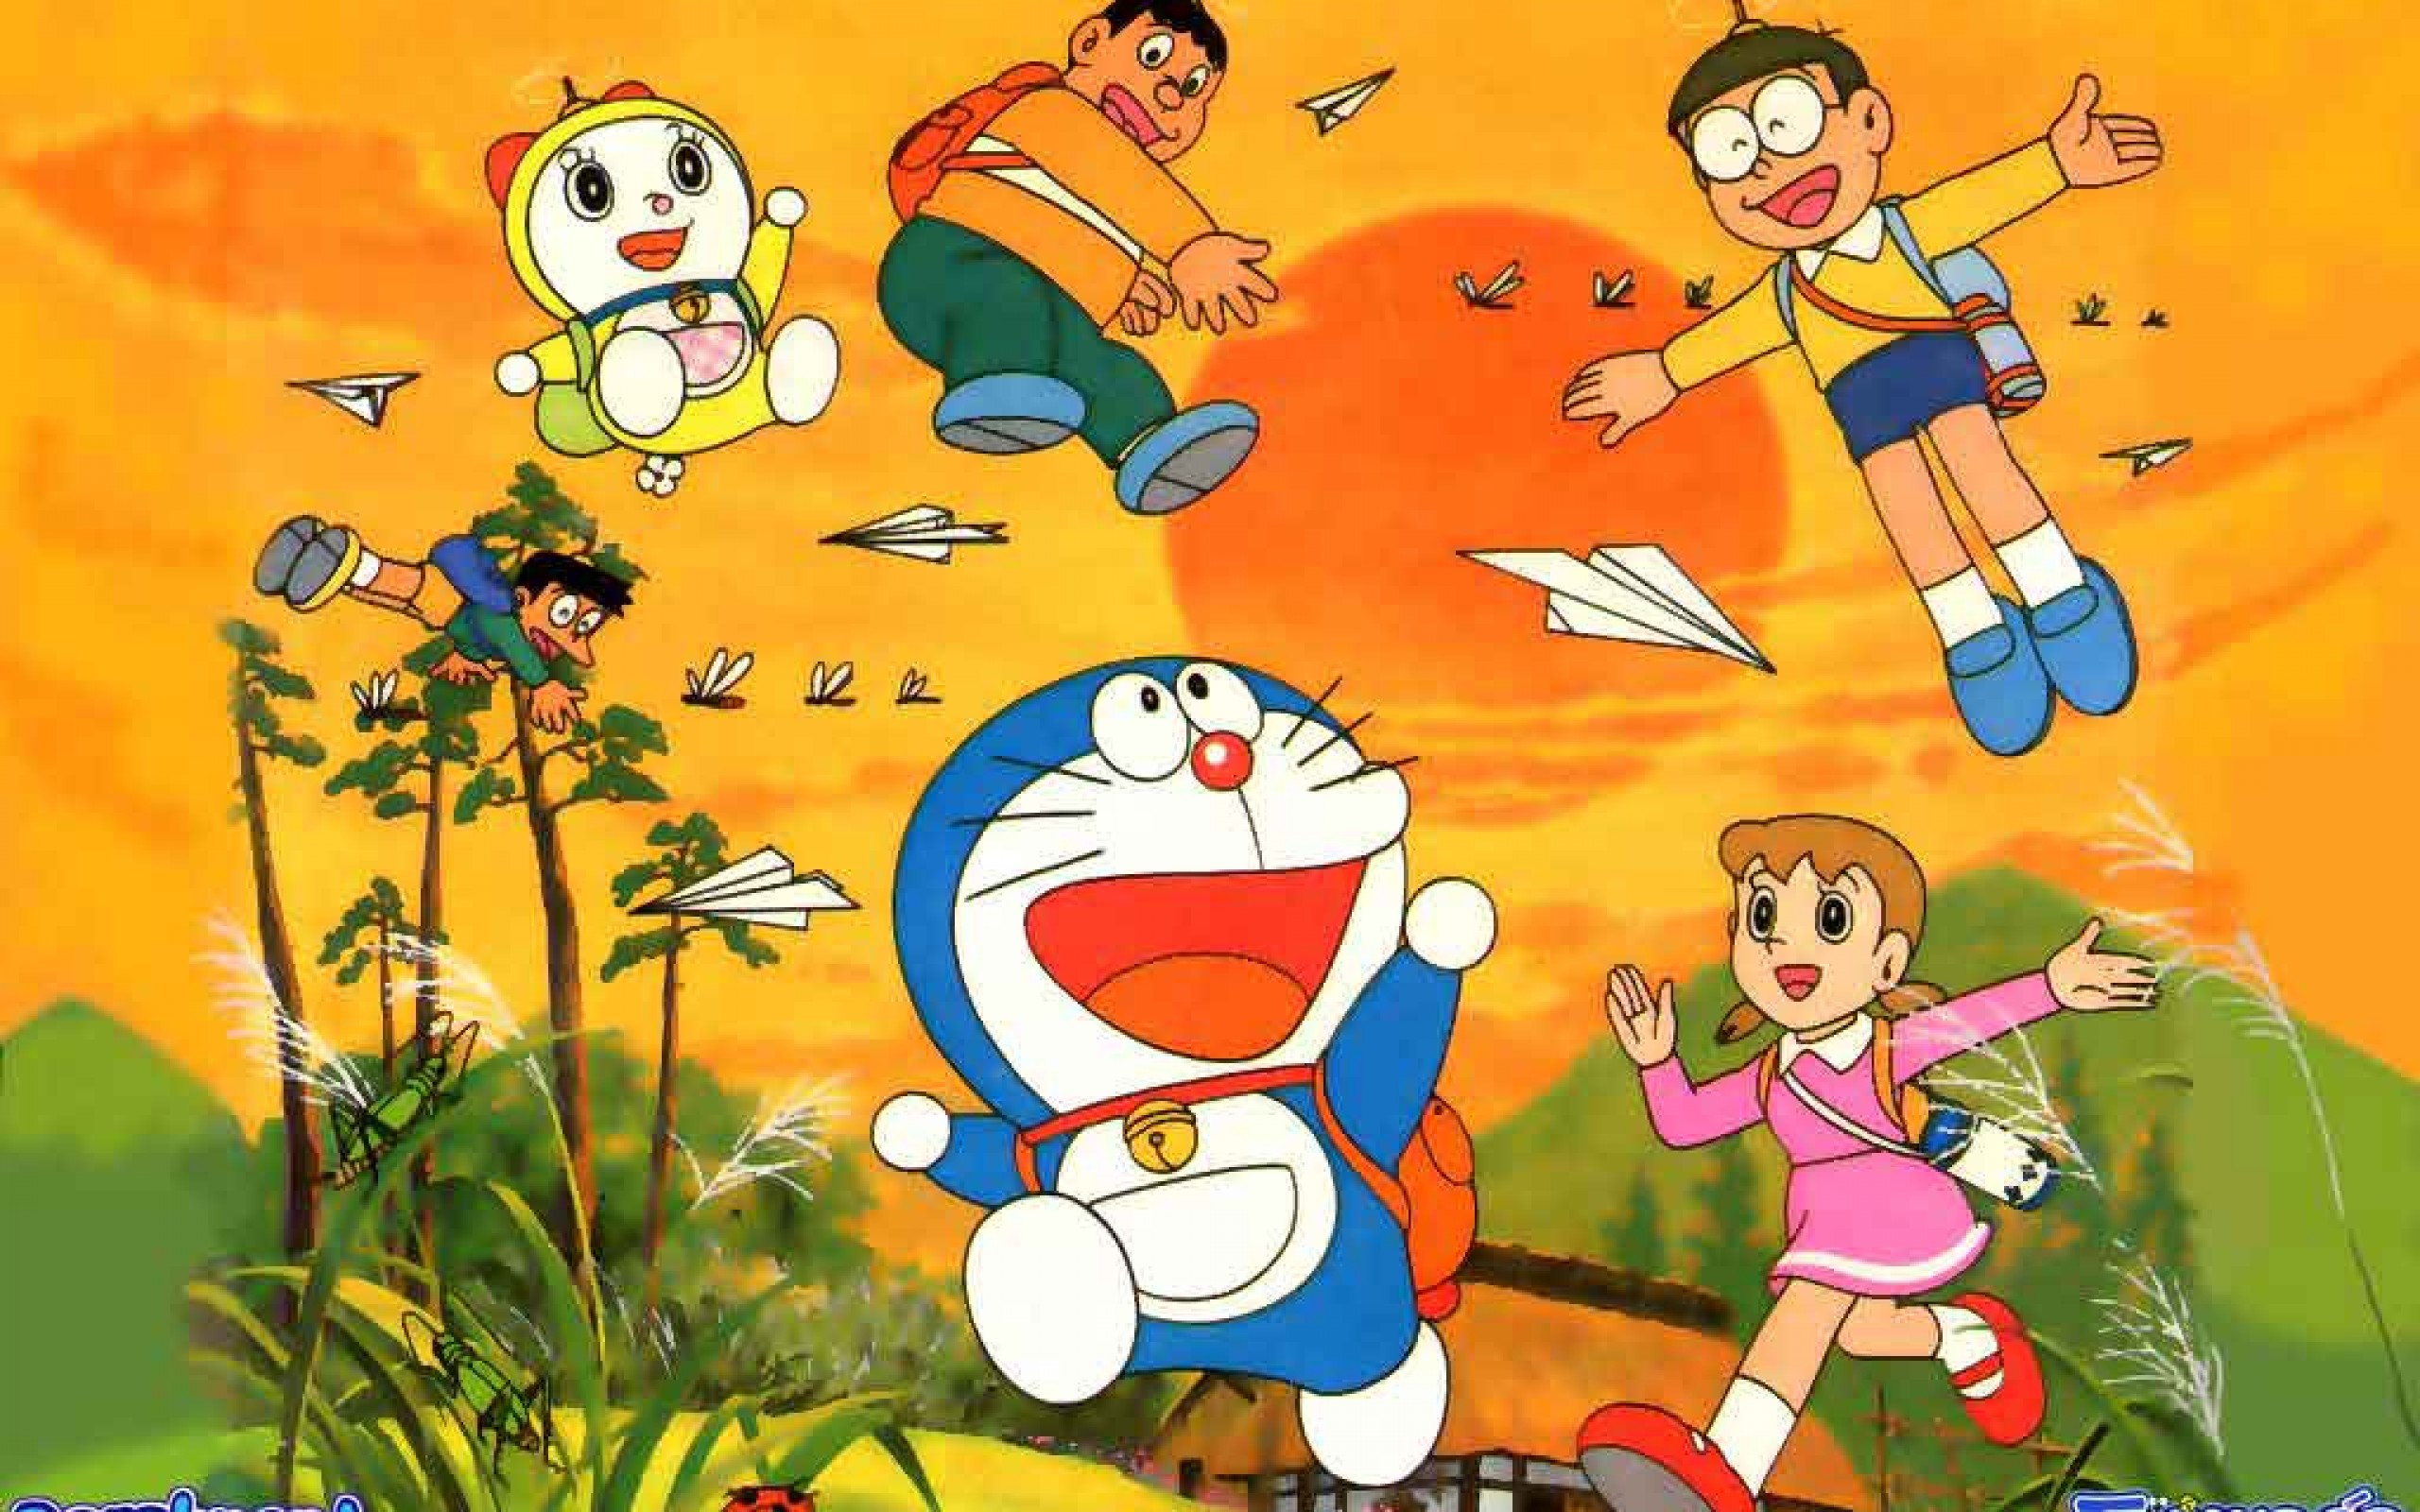 Best Doraemon Wallpaper - Wallpaper, High Definition, High Quality